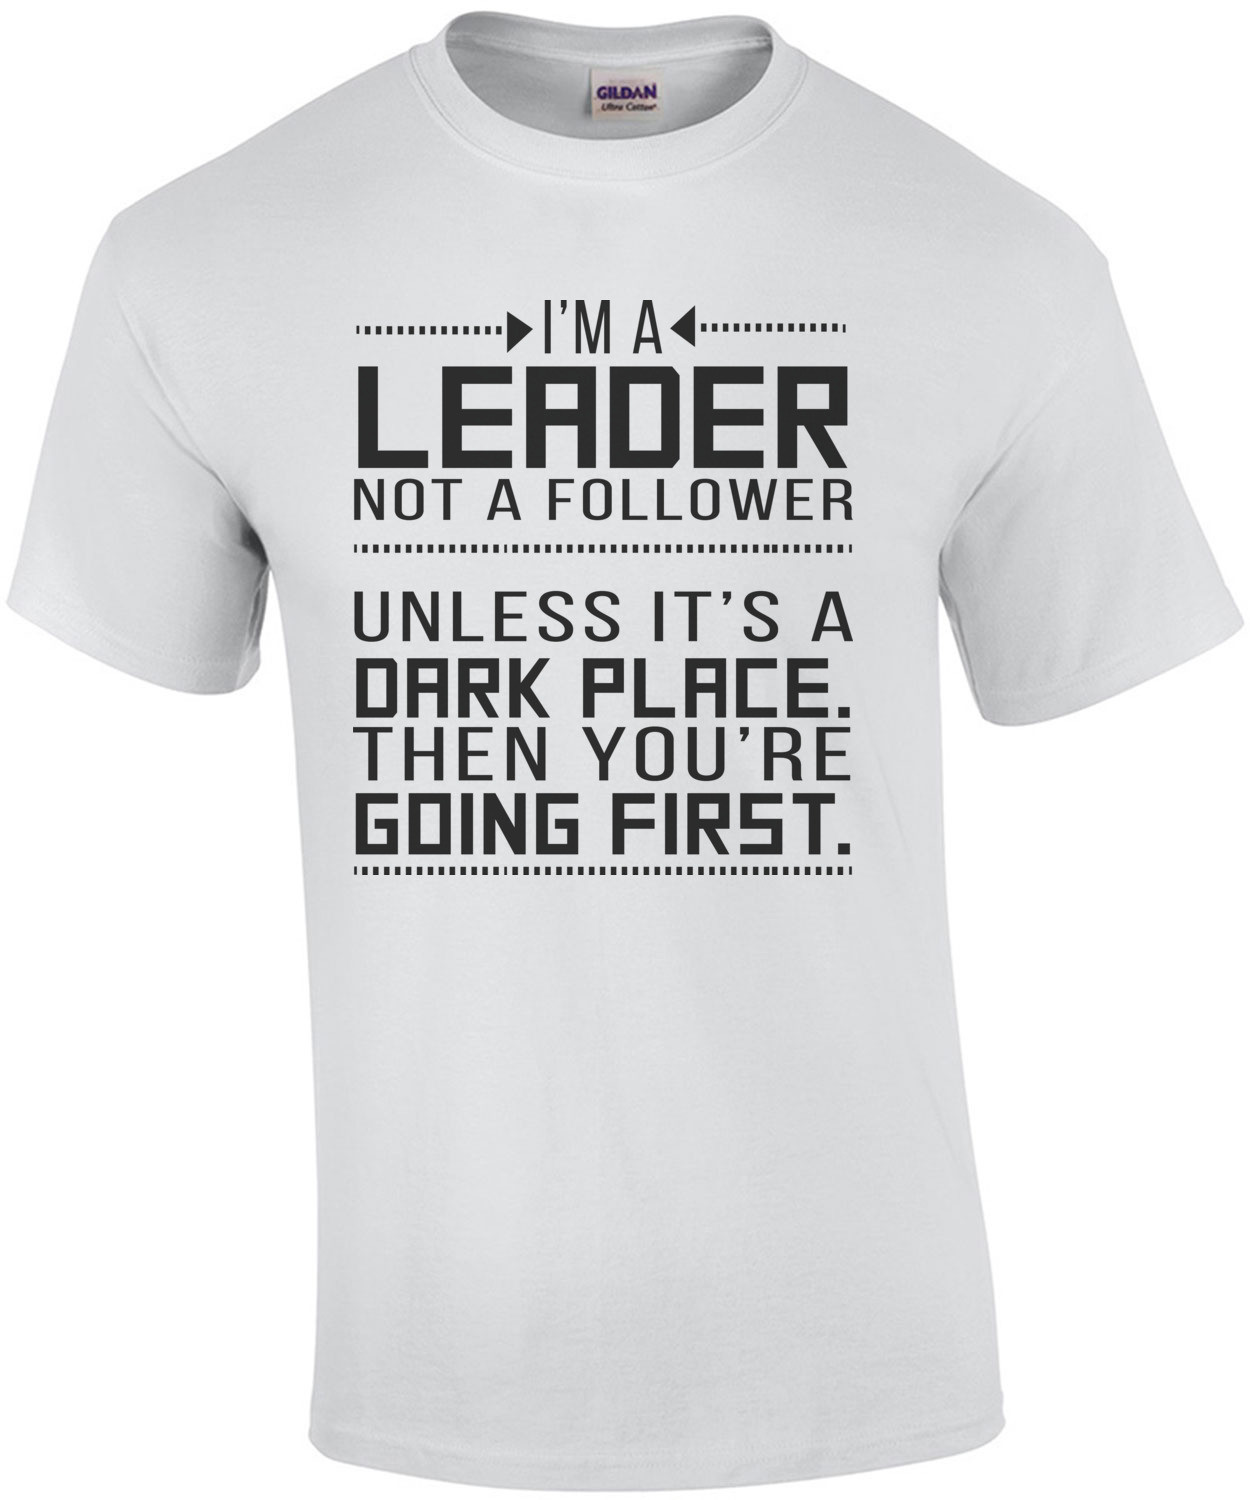 I'm a leader not a follower. Unless it's a dark place.